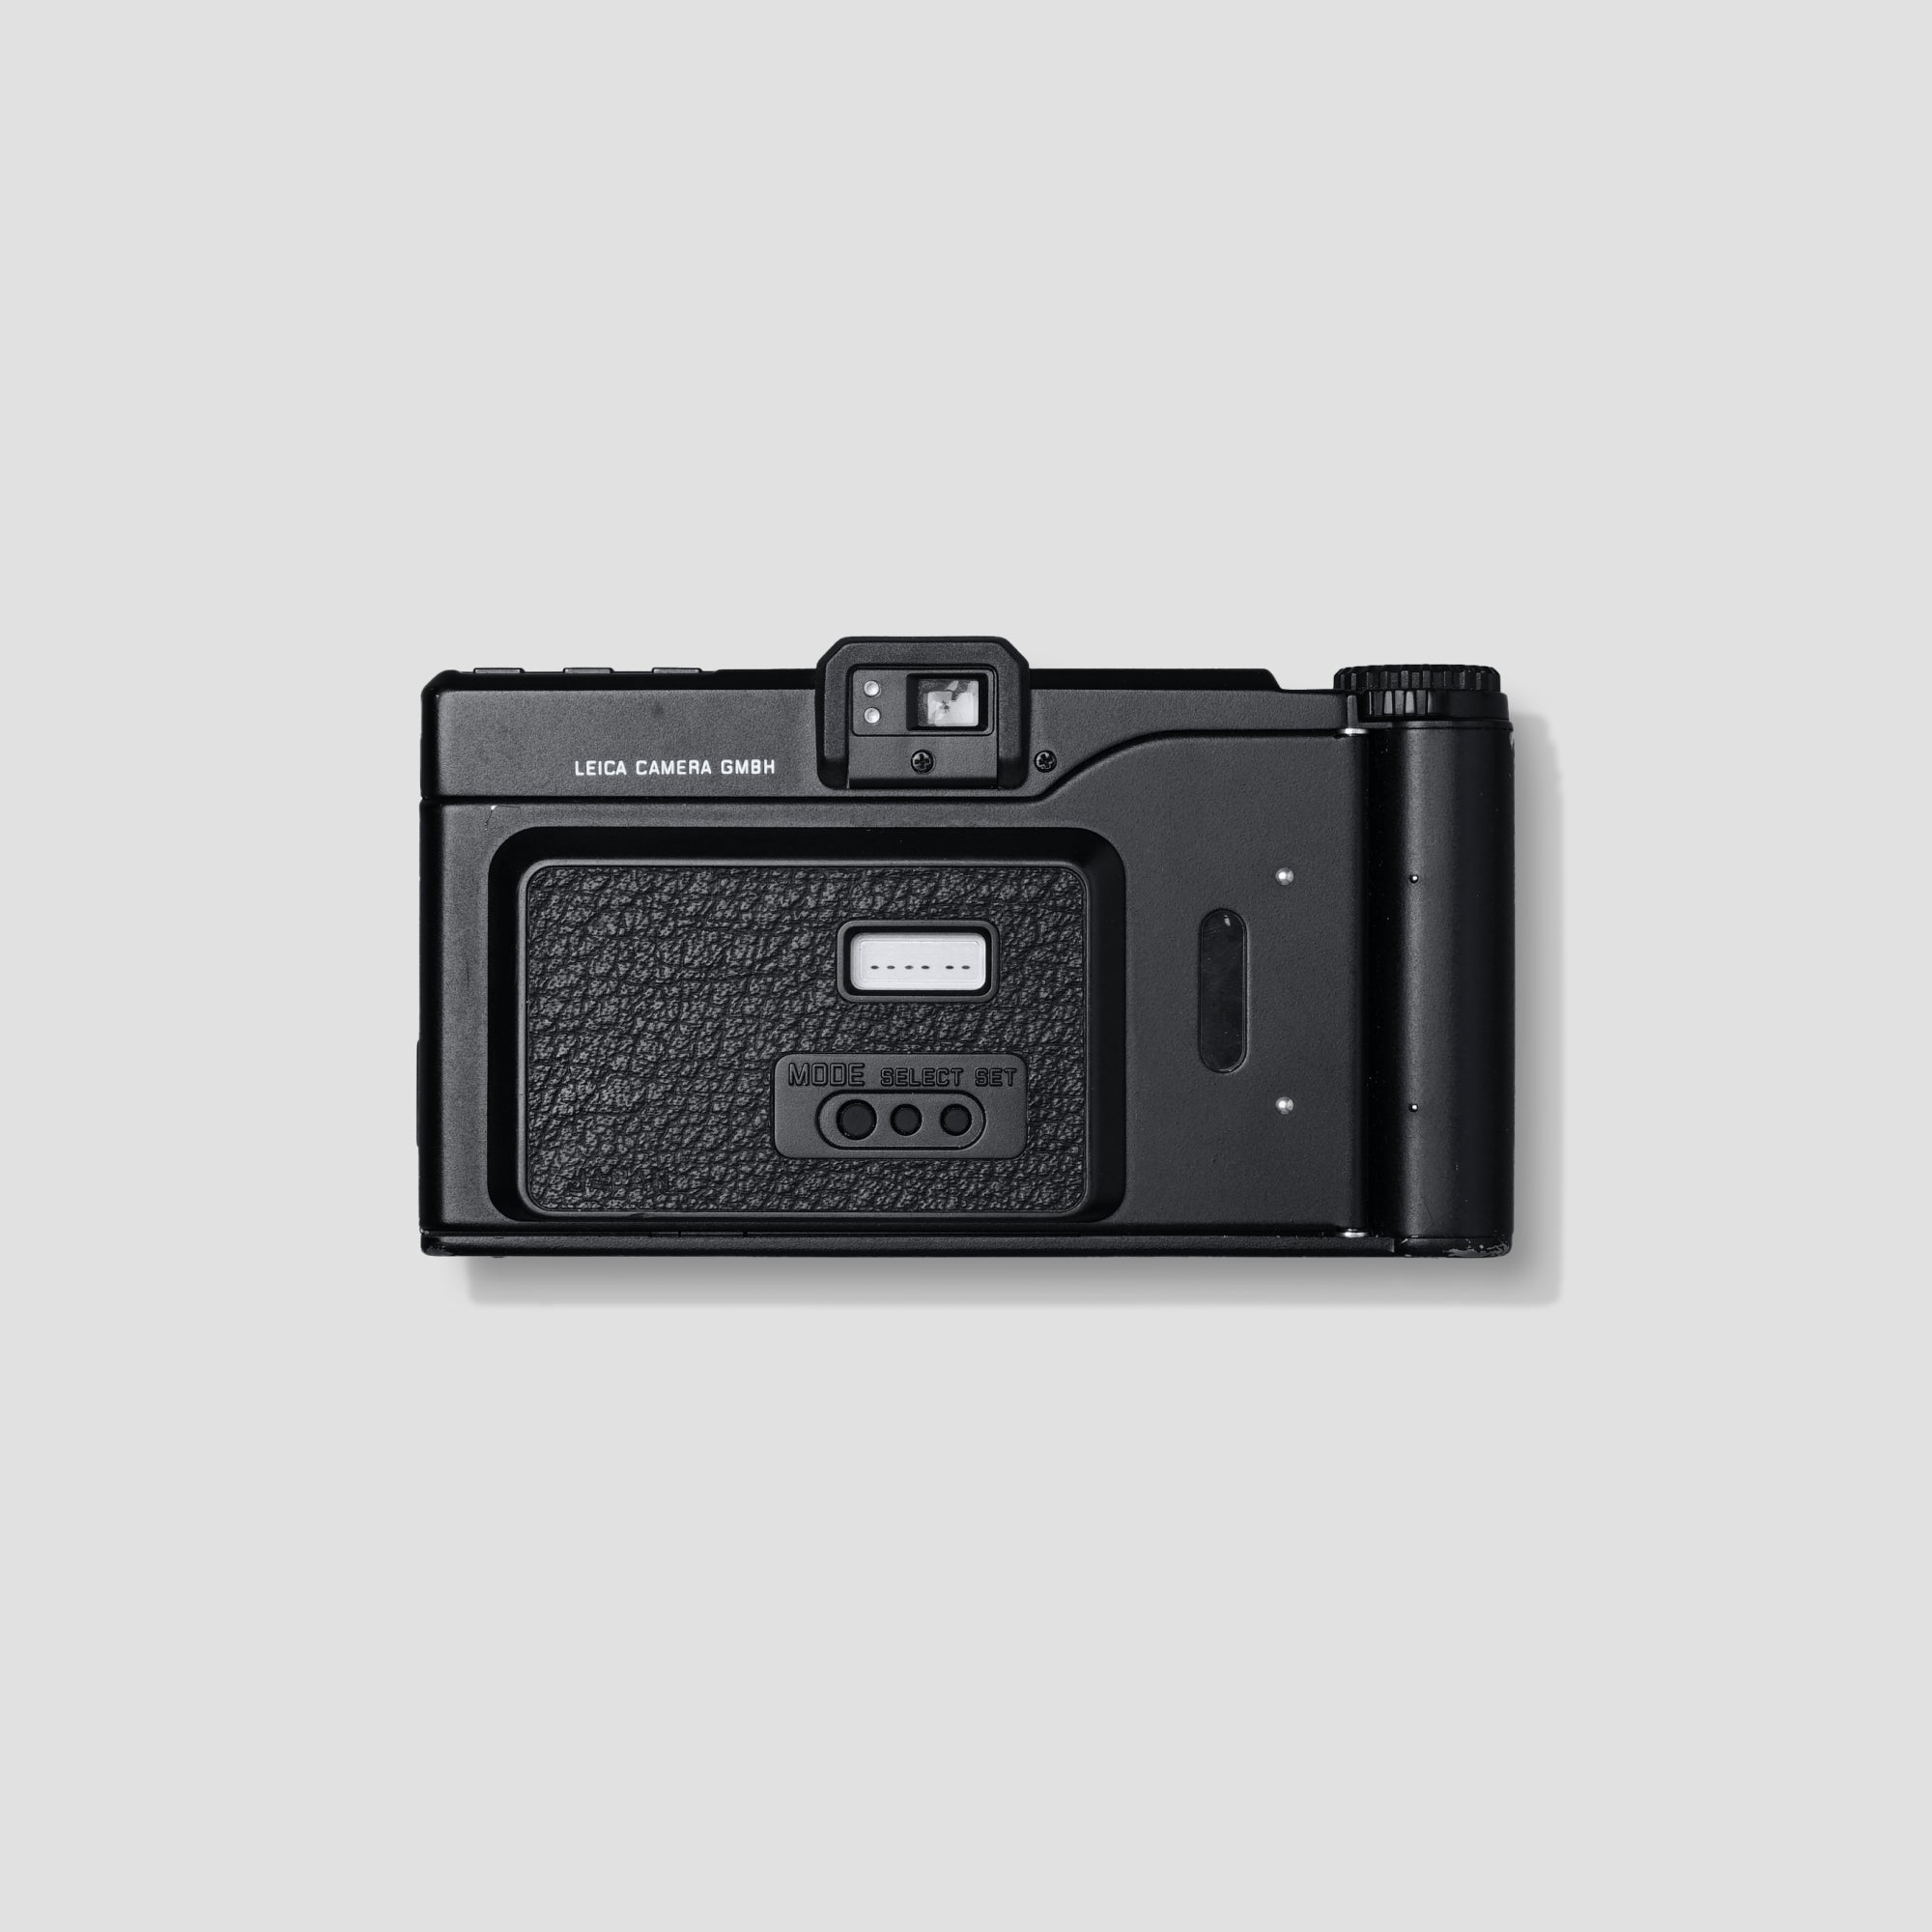 Leica Minilux (limited)